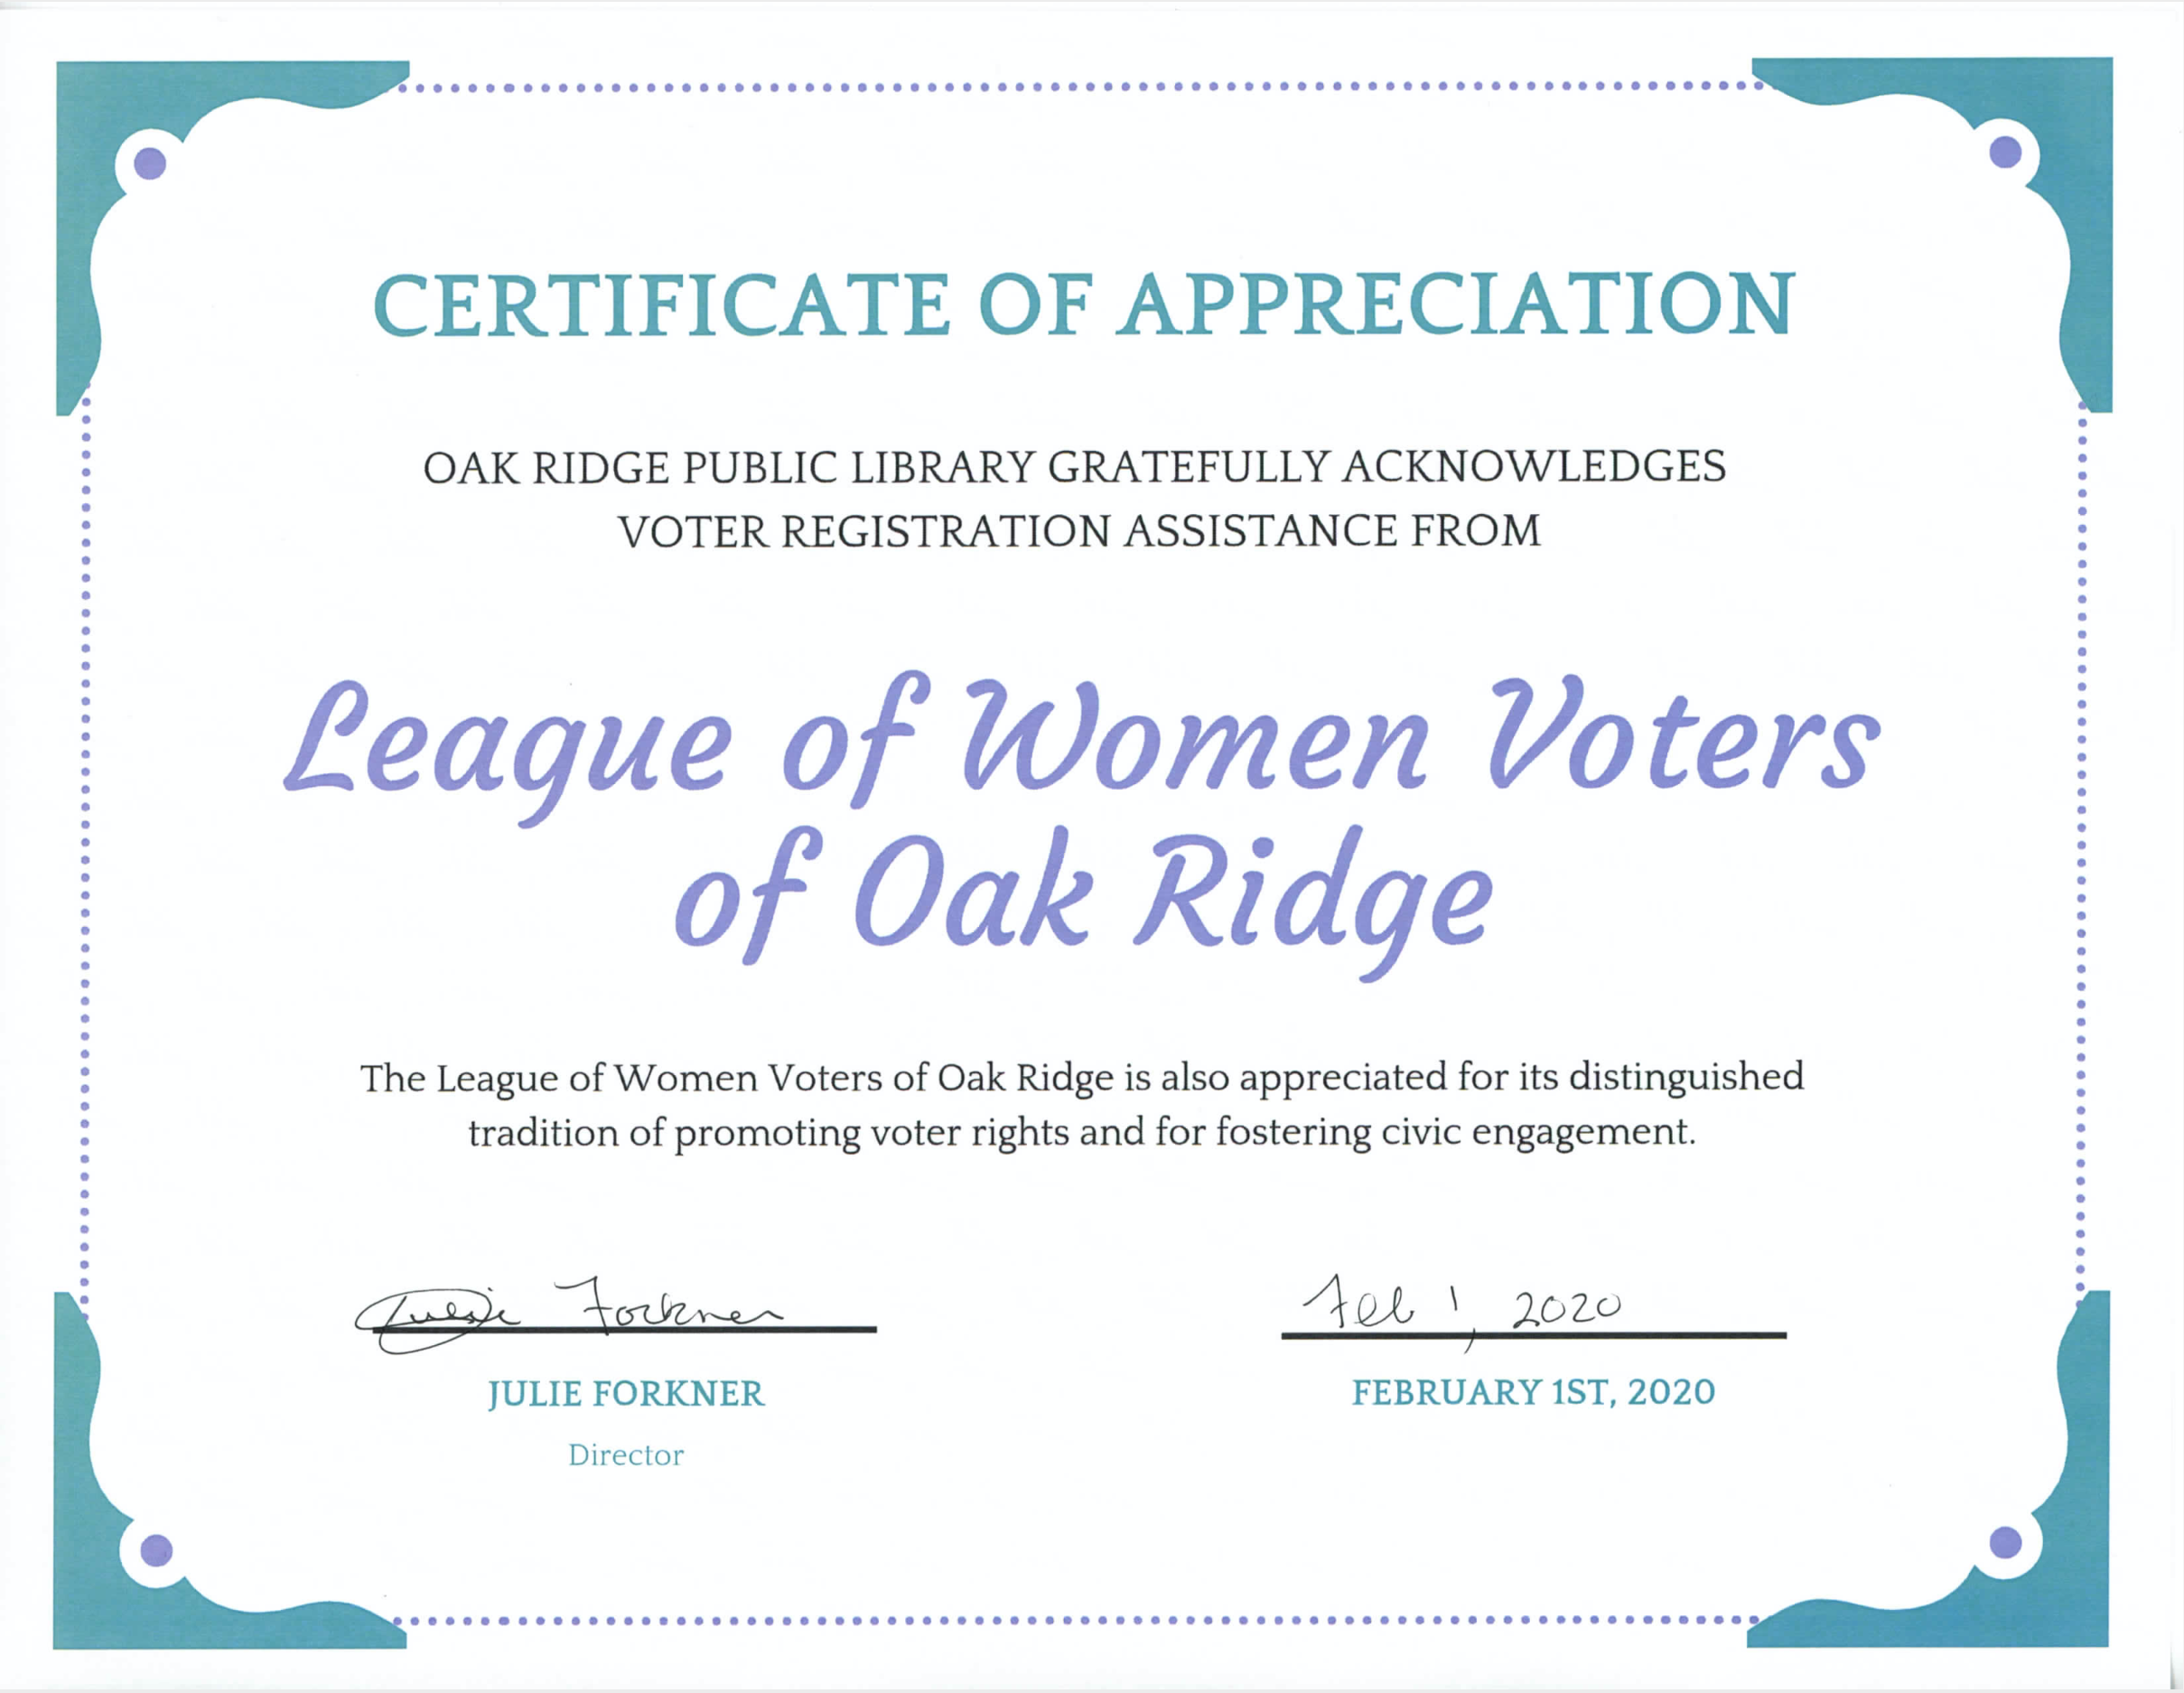 Certificate of Appreciation from the Oak Ridge Public Library